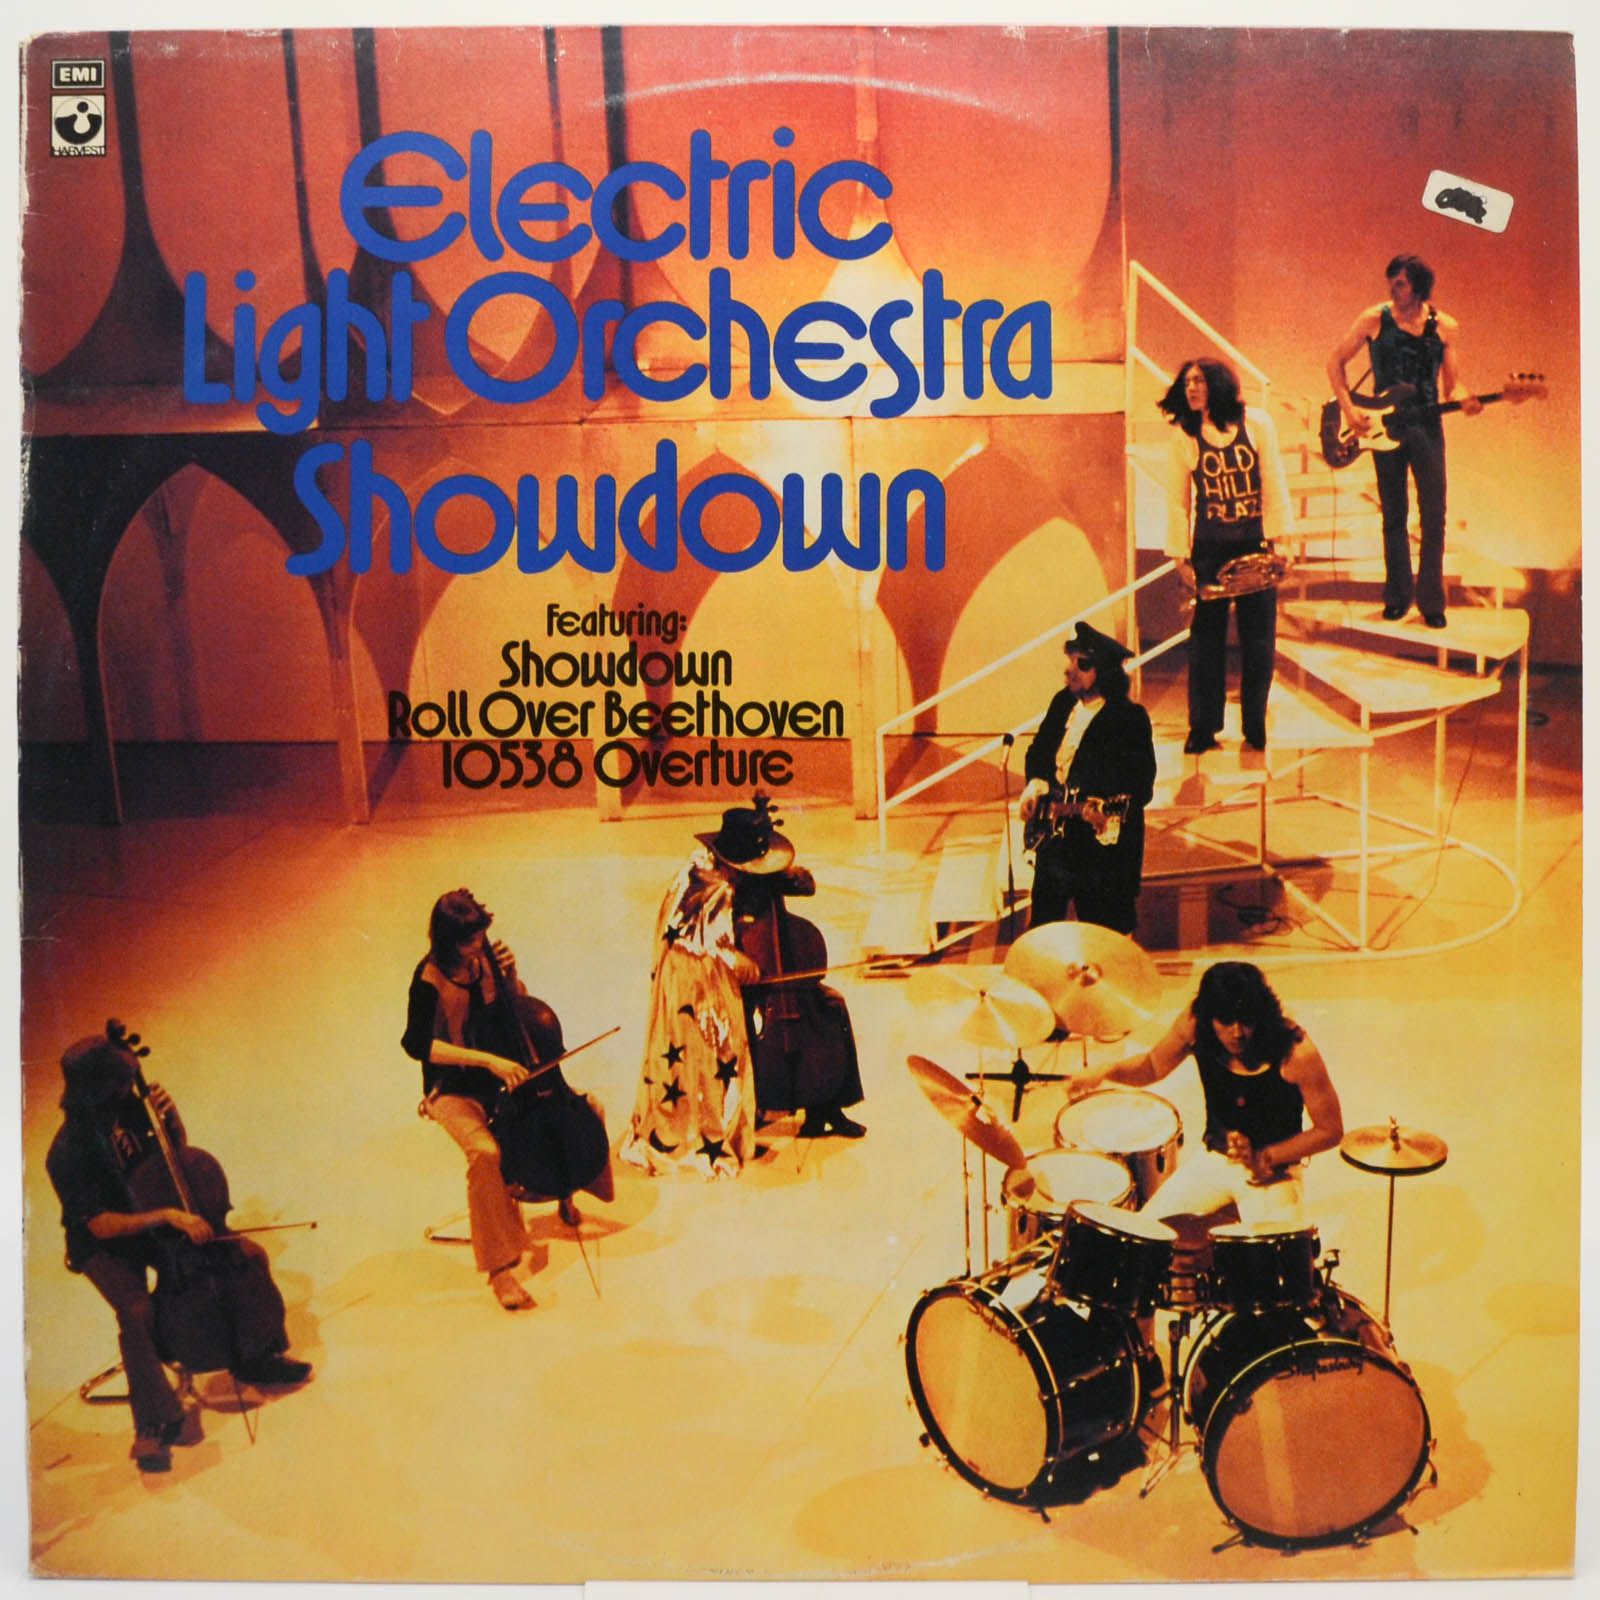 Electric Light Orchestra — Showdown, 1973